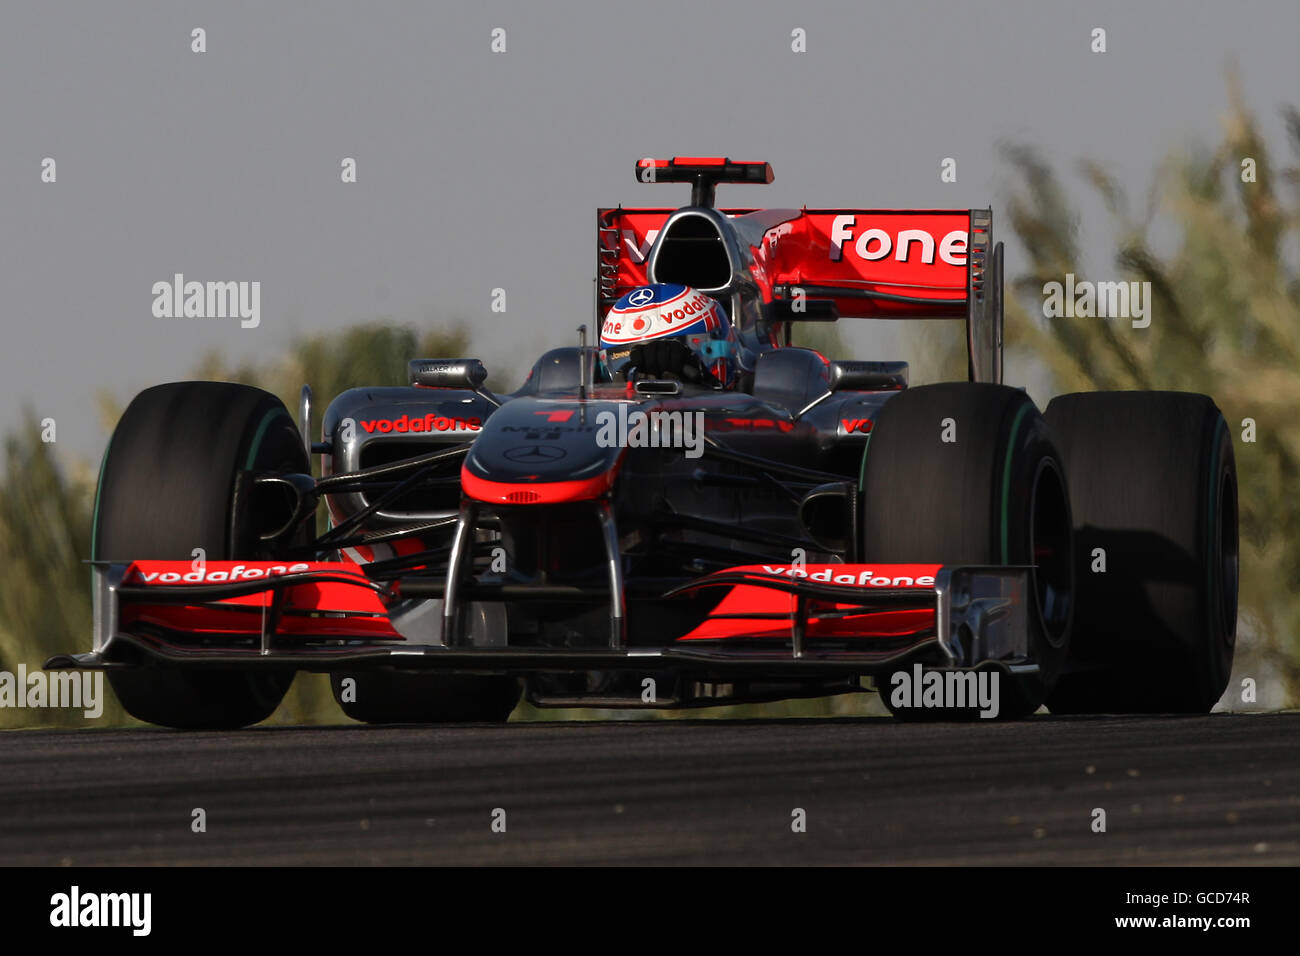 McLaren's Jenson Button during the Gulf Air Bahrain Grand Prix at the Bahrain International Circuit in Sakhir, Bahrain Stock Photo